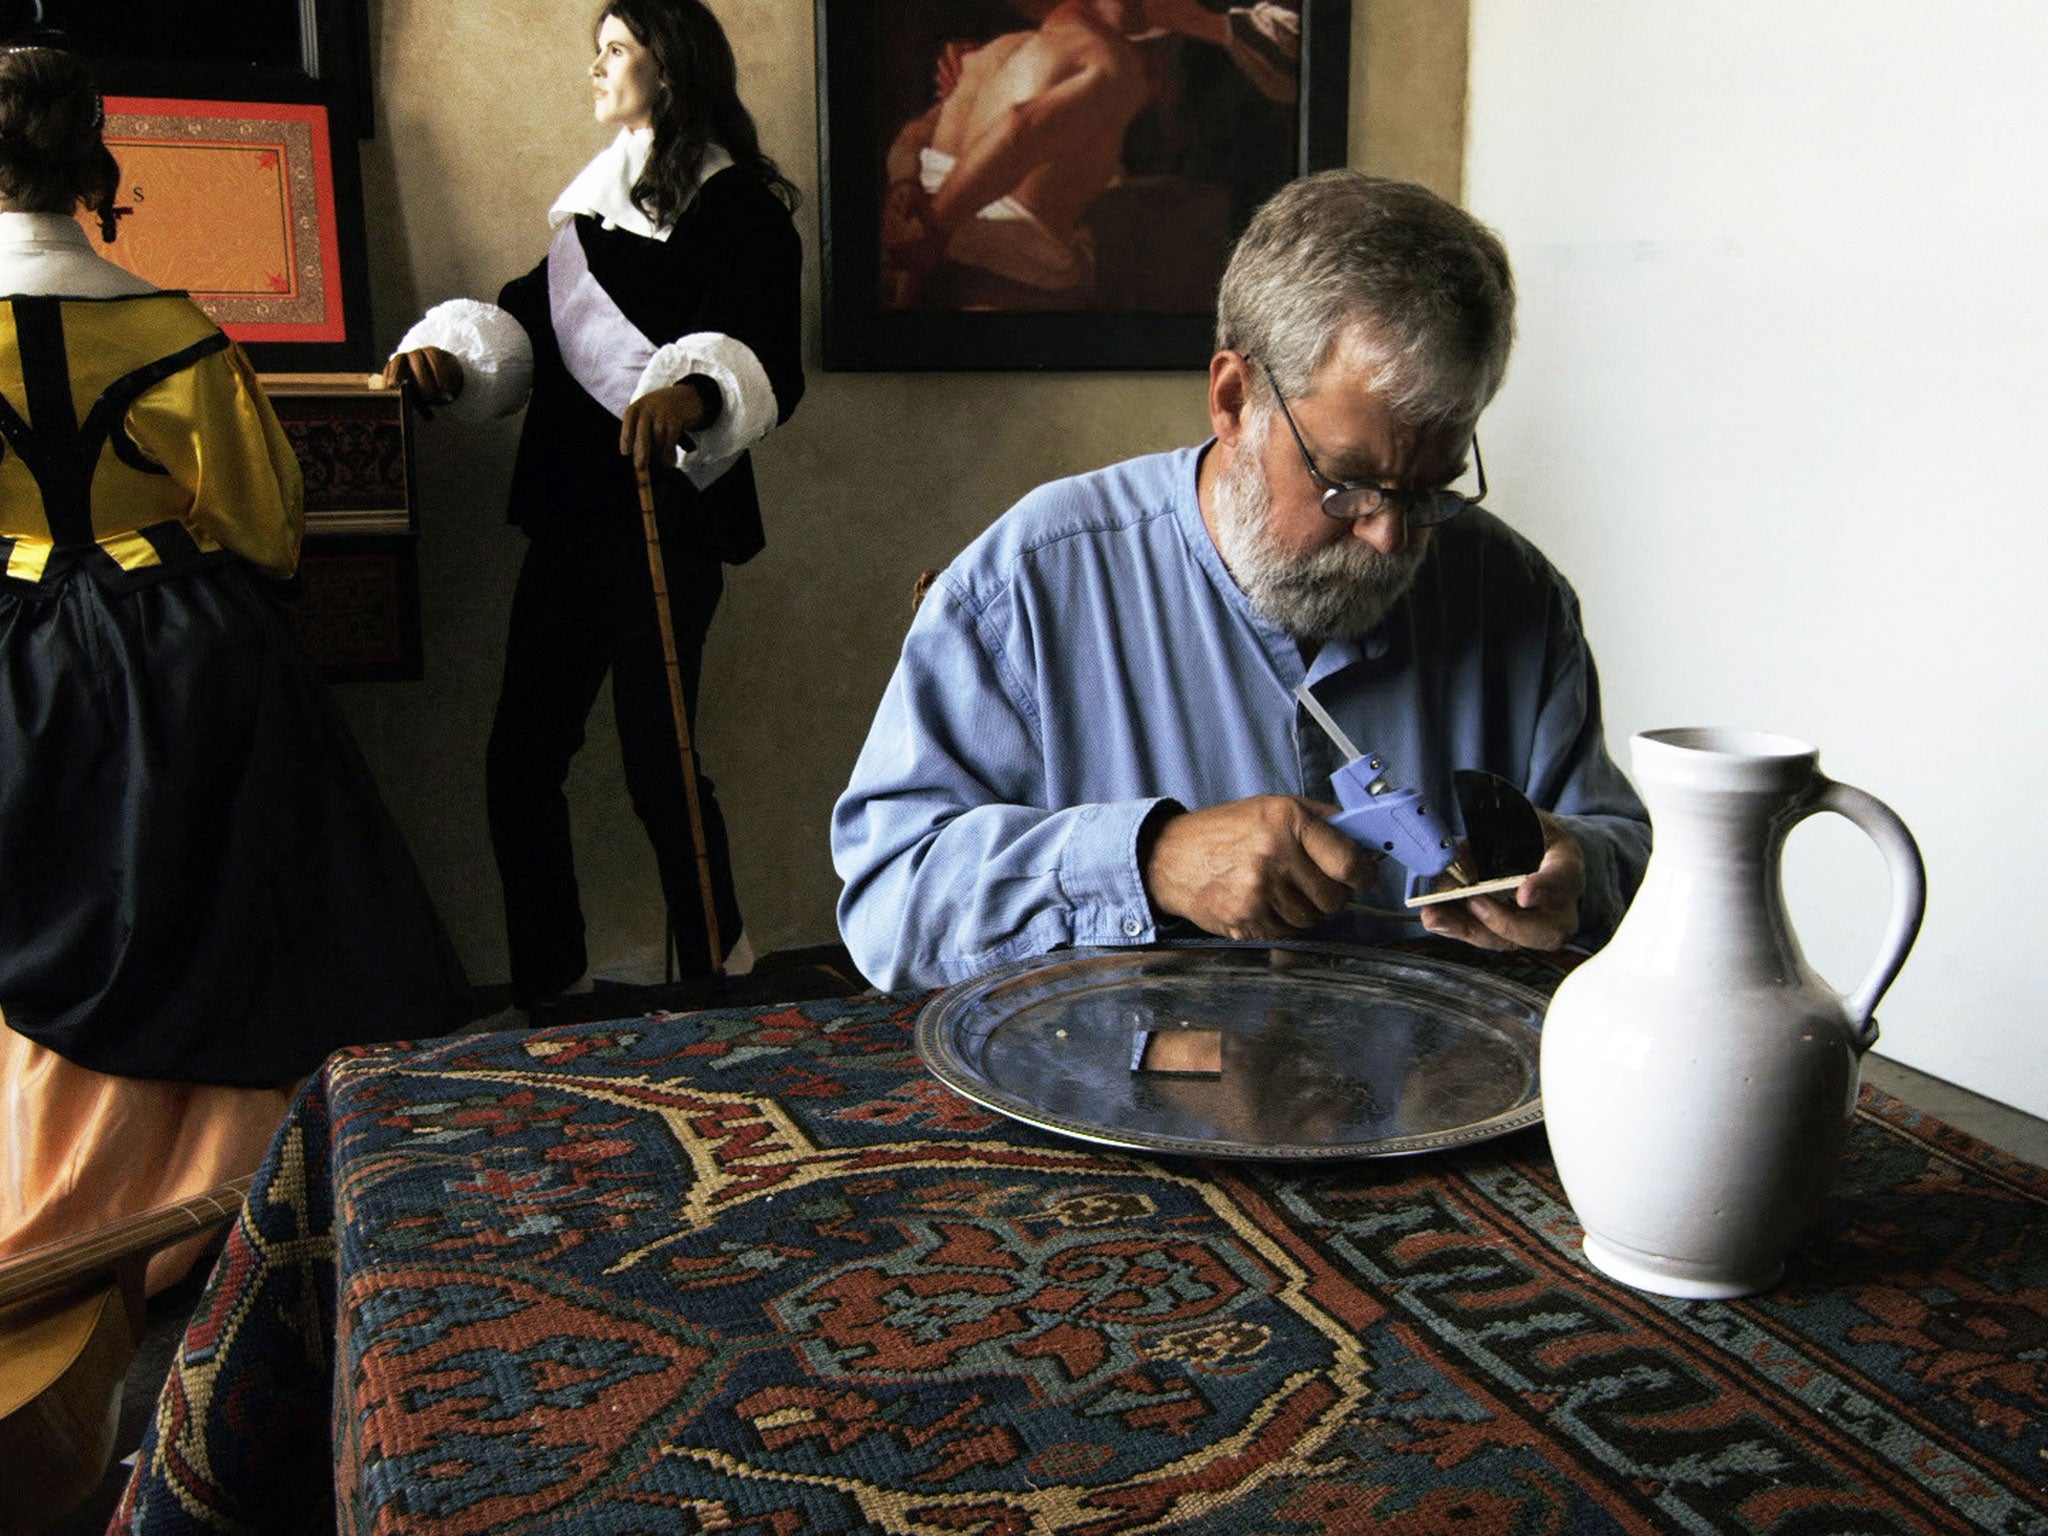 Making a scene: the inventor Tim Jenison in 'Tim's Vermeer'